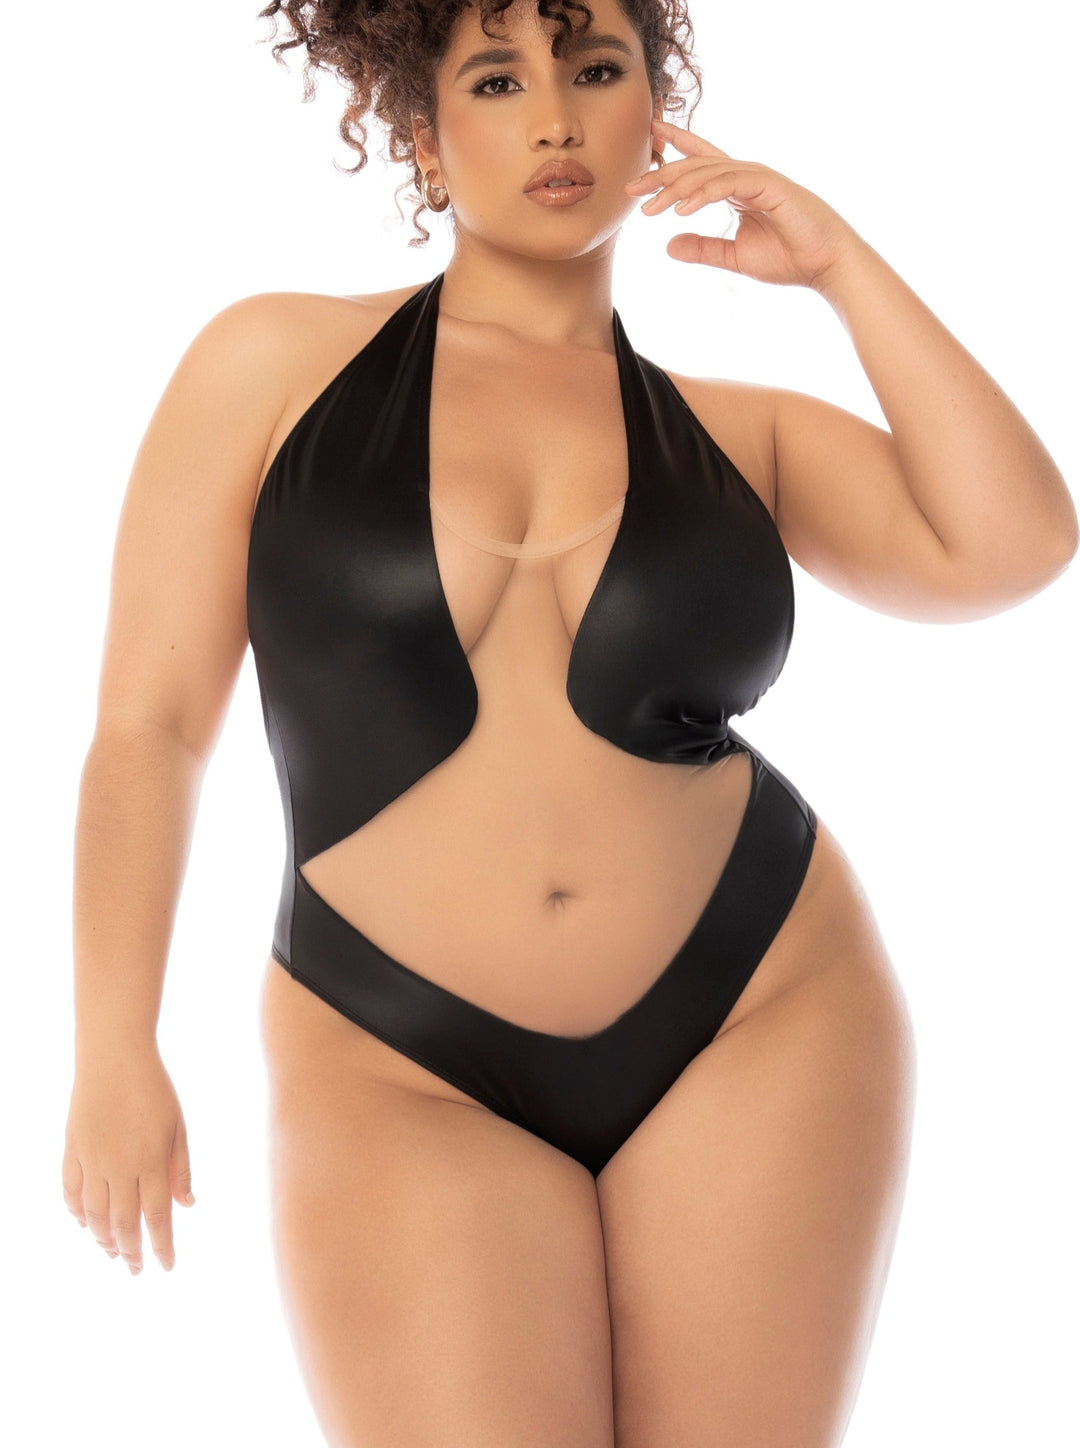 Mapale Queen Romy Sheer Optical Illusion Bodysuit Teddy Nude/Black